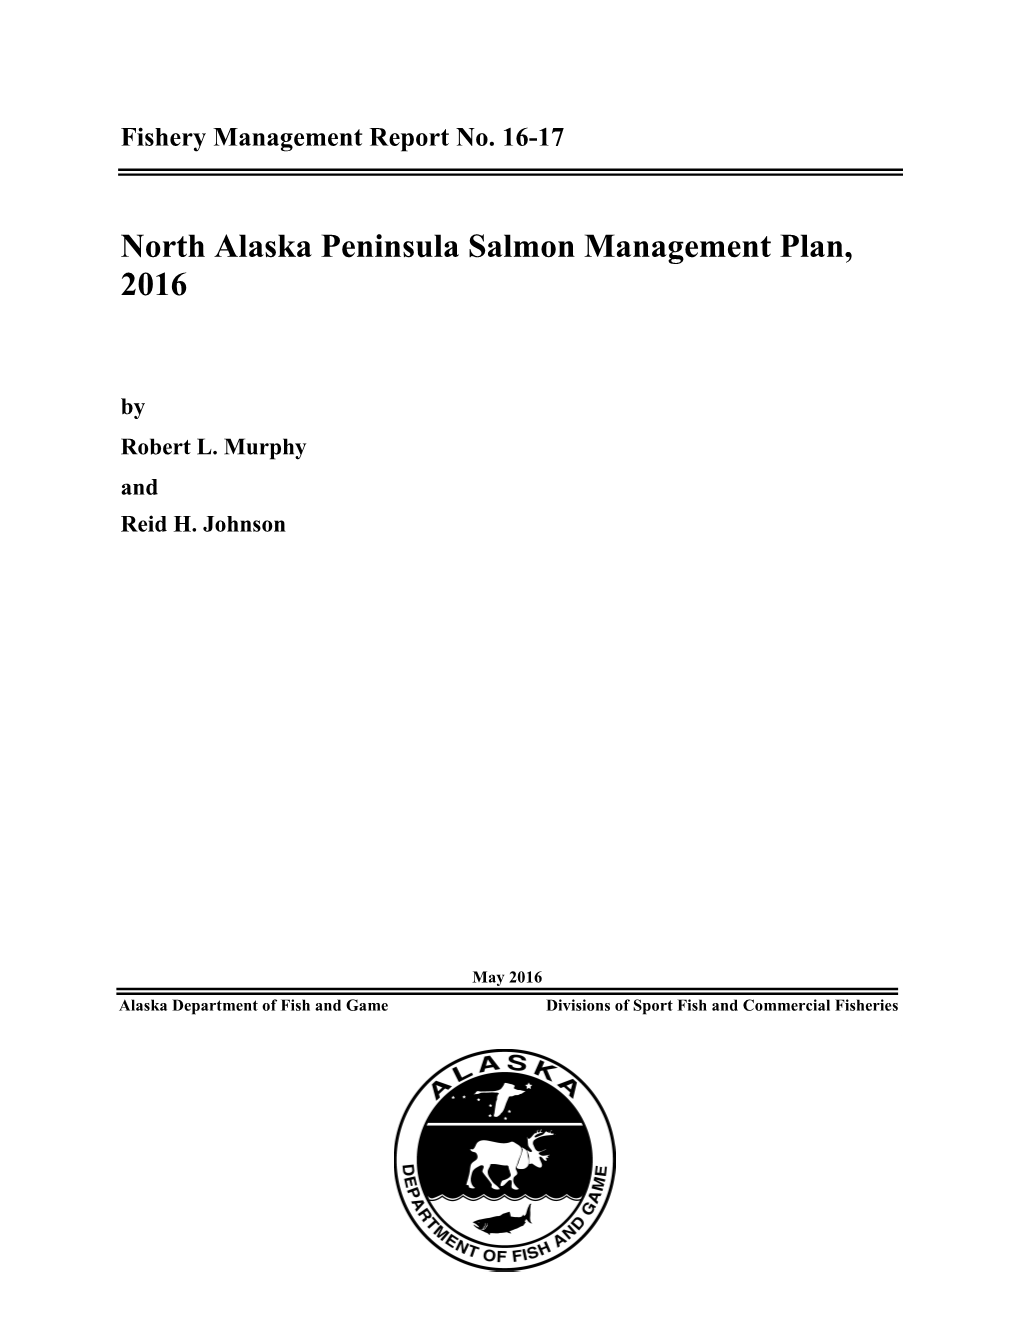 North Alaska Peninsula Salmon Management Plan, 2016. Alaska Department of Fish and Game, Fishery Management Report No